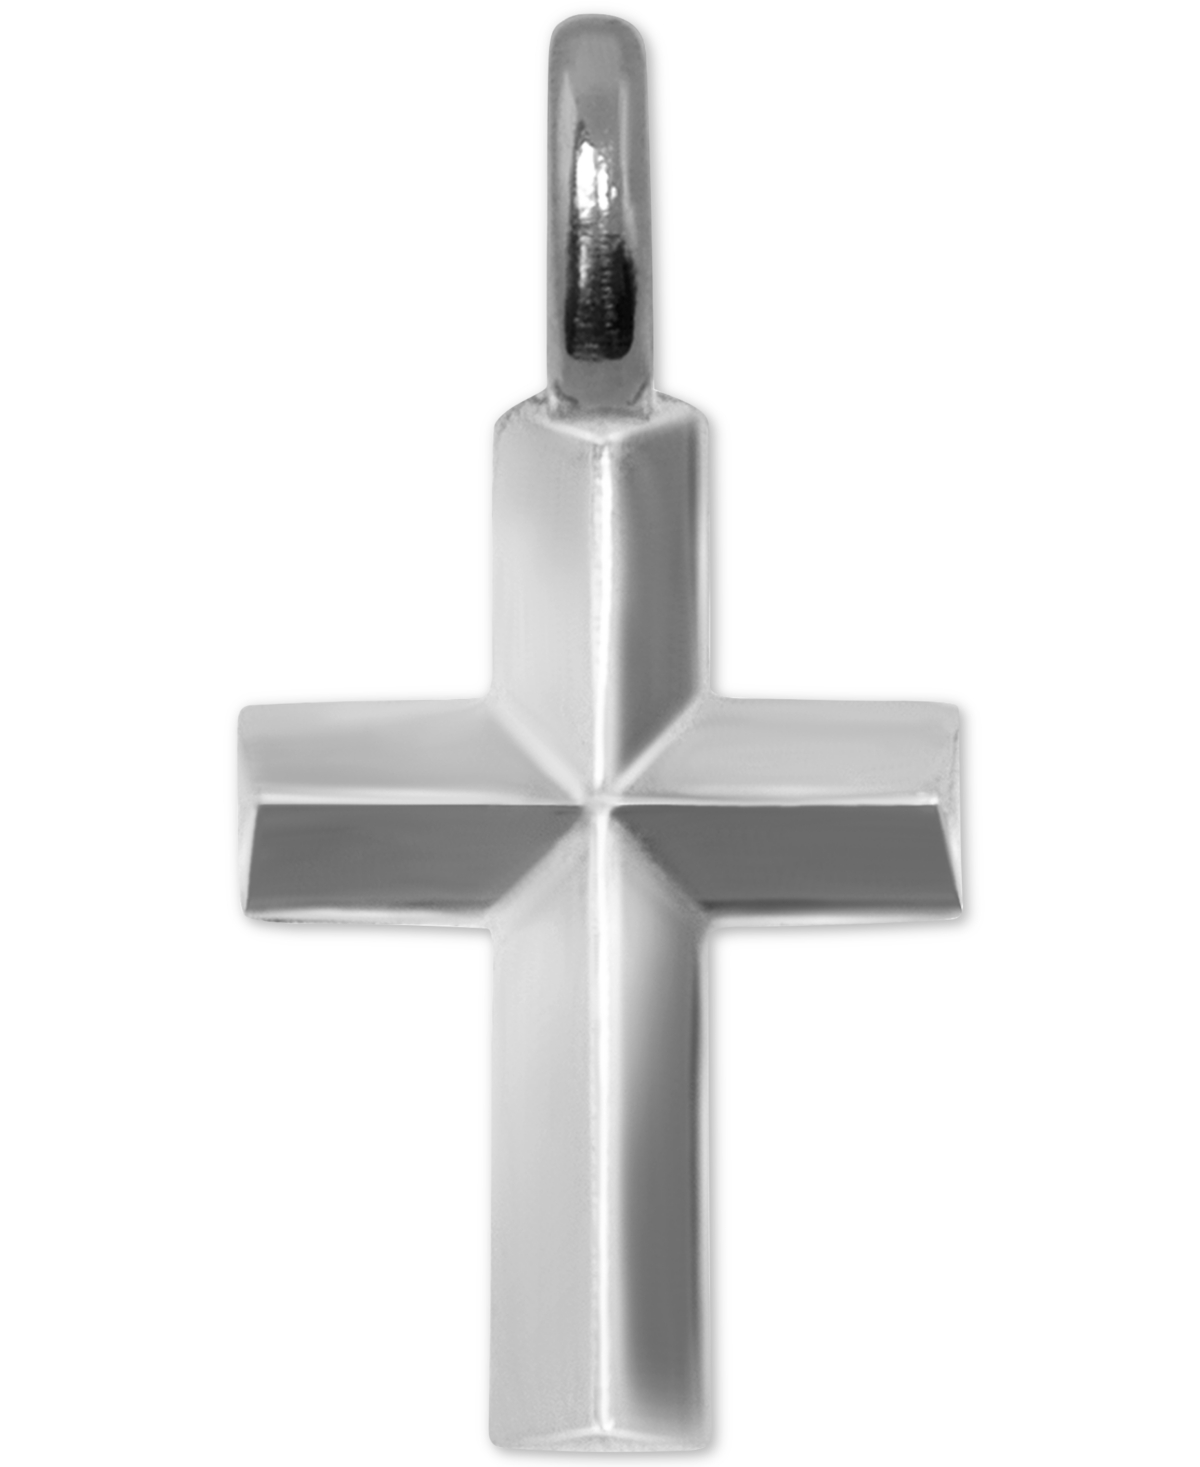 Mini Cross Charm Pendant in Sterling Silver - Sterling Silver